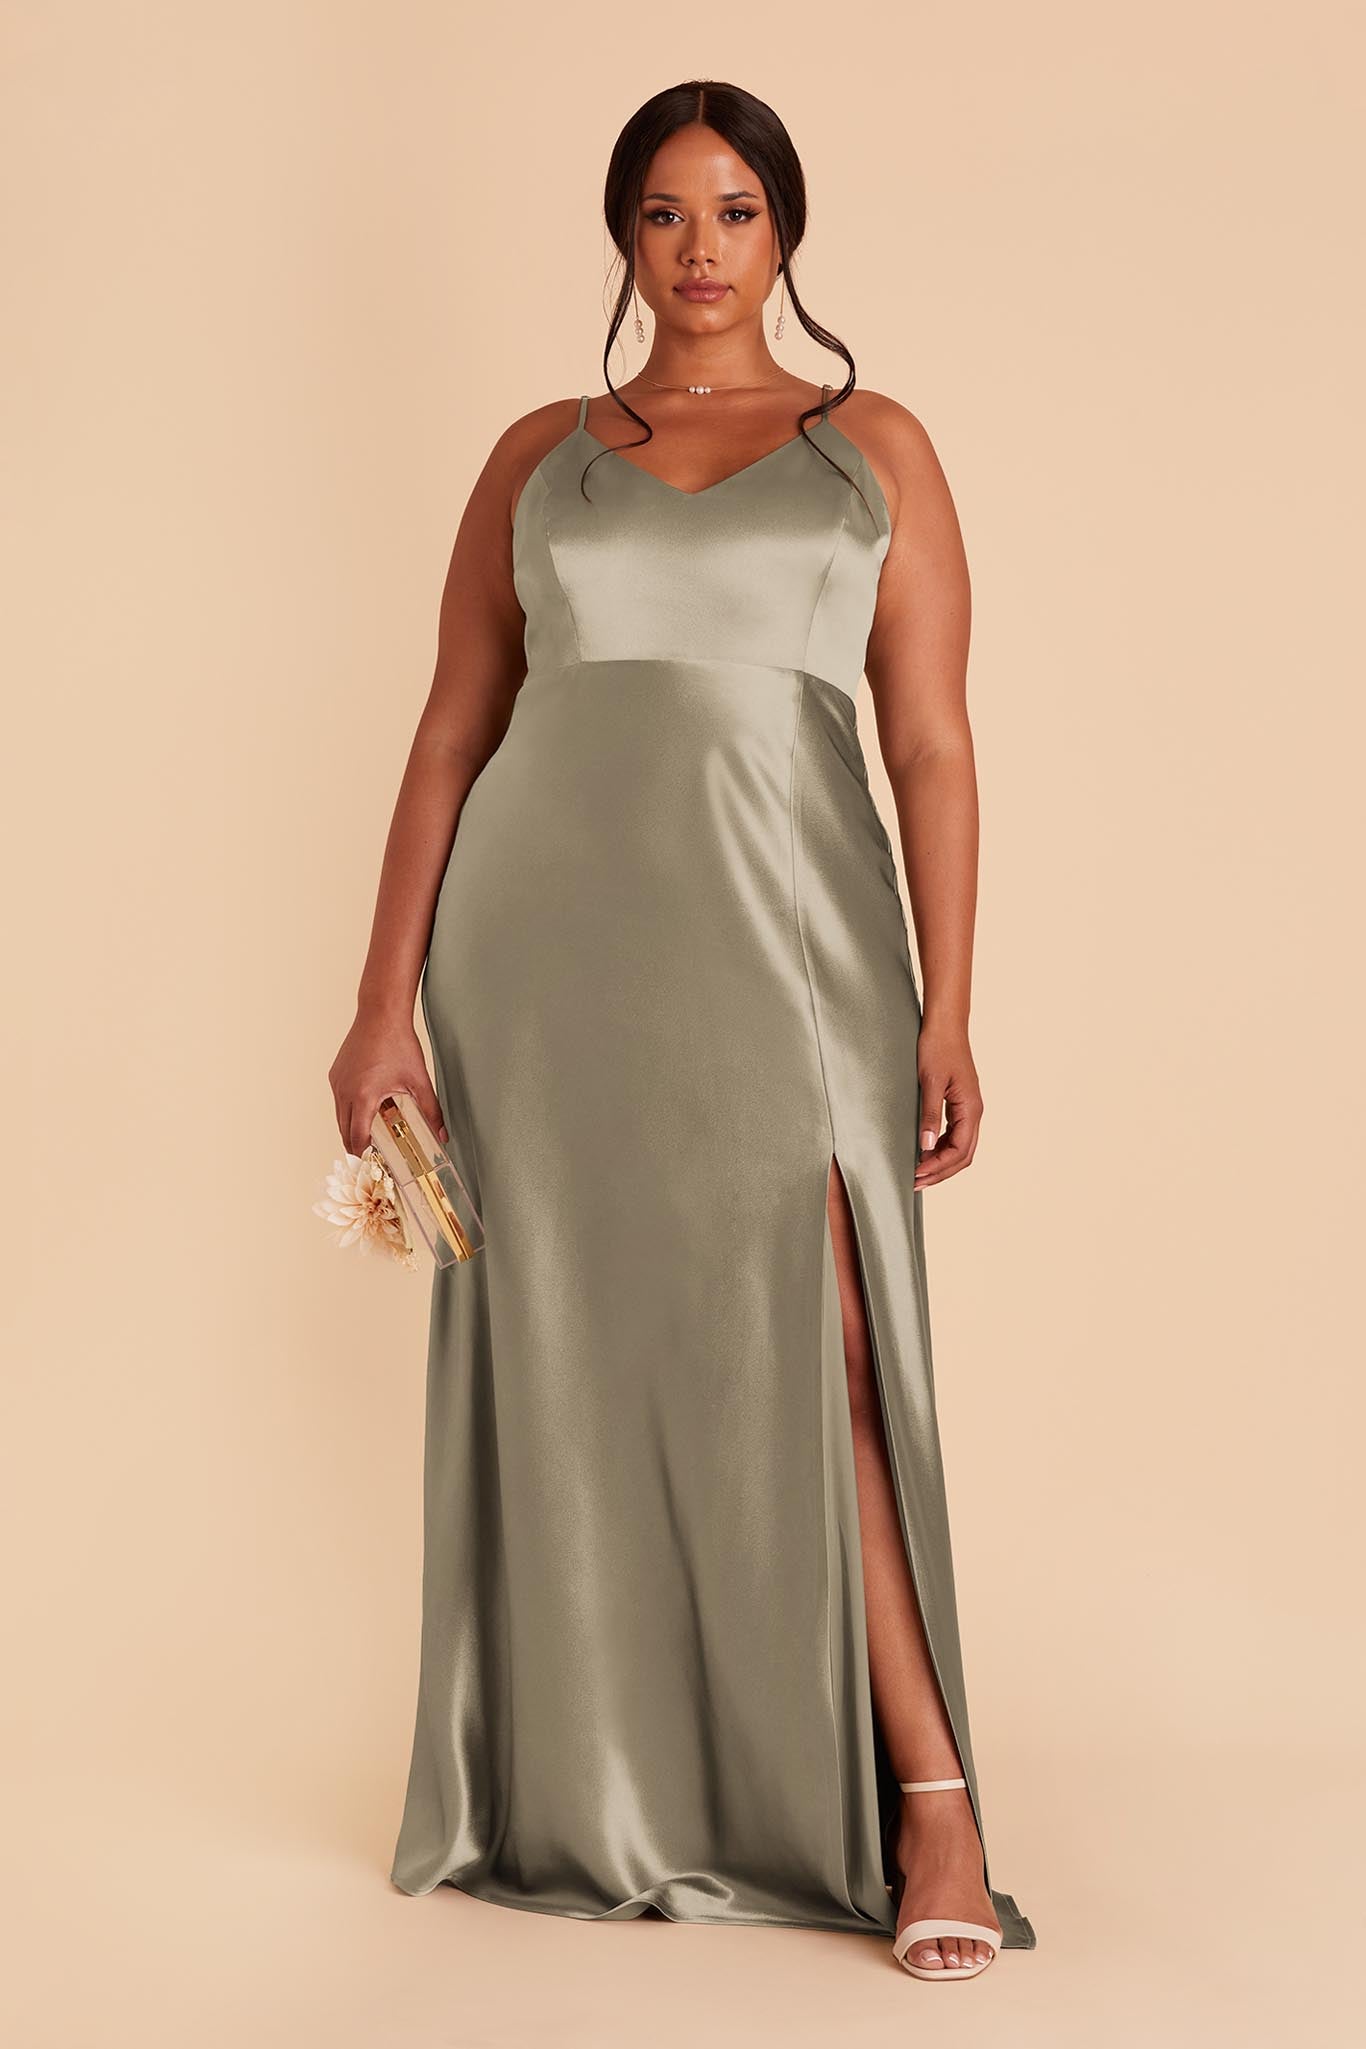 Moss Green Jay Satin Dress by Birdy Grey